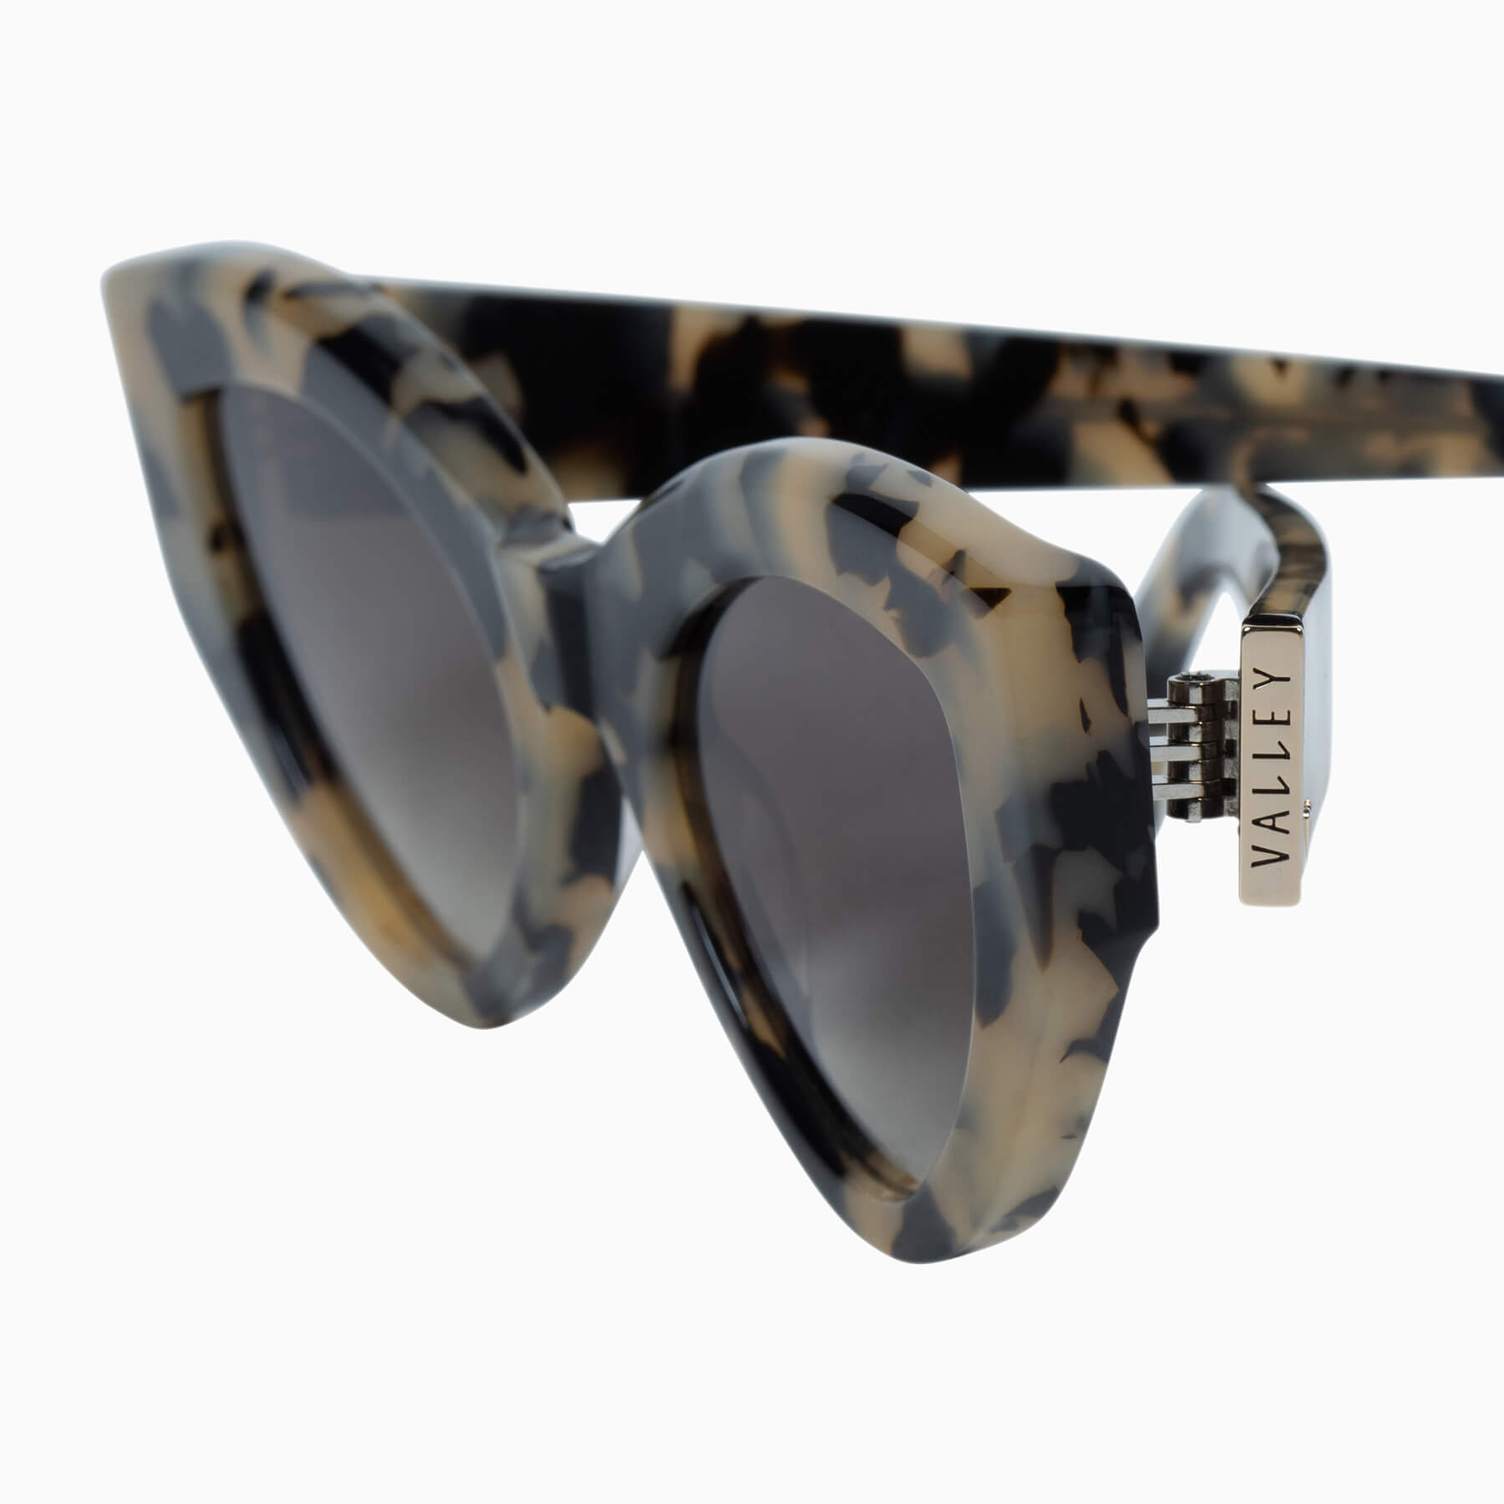 Bones | Sunglasses - Fawn Tort w. Gold Metal Trim / Black Gradient Lens | Sunglasses